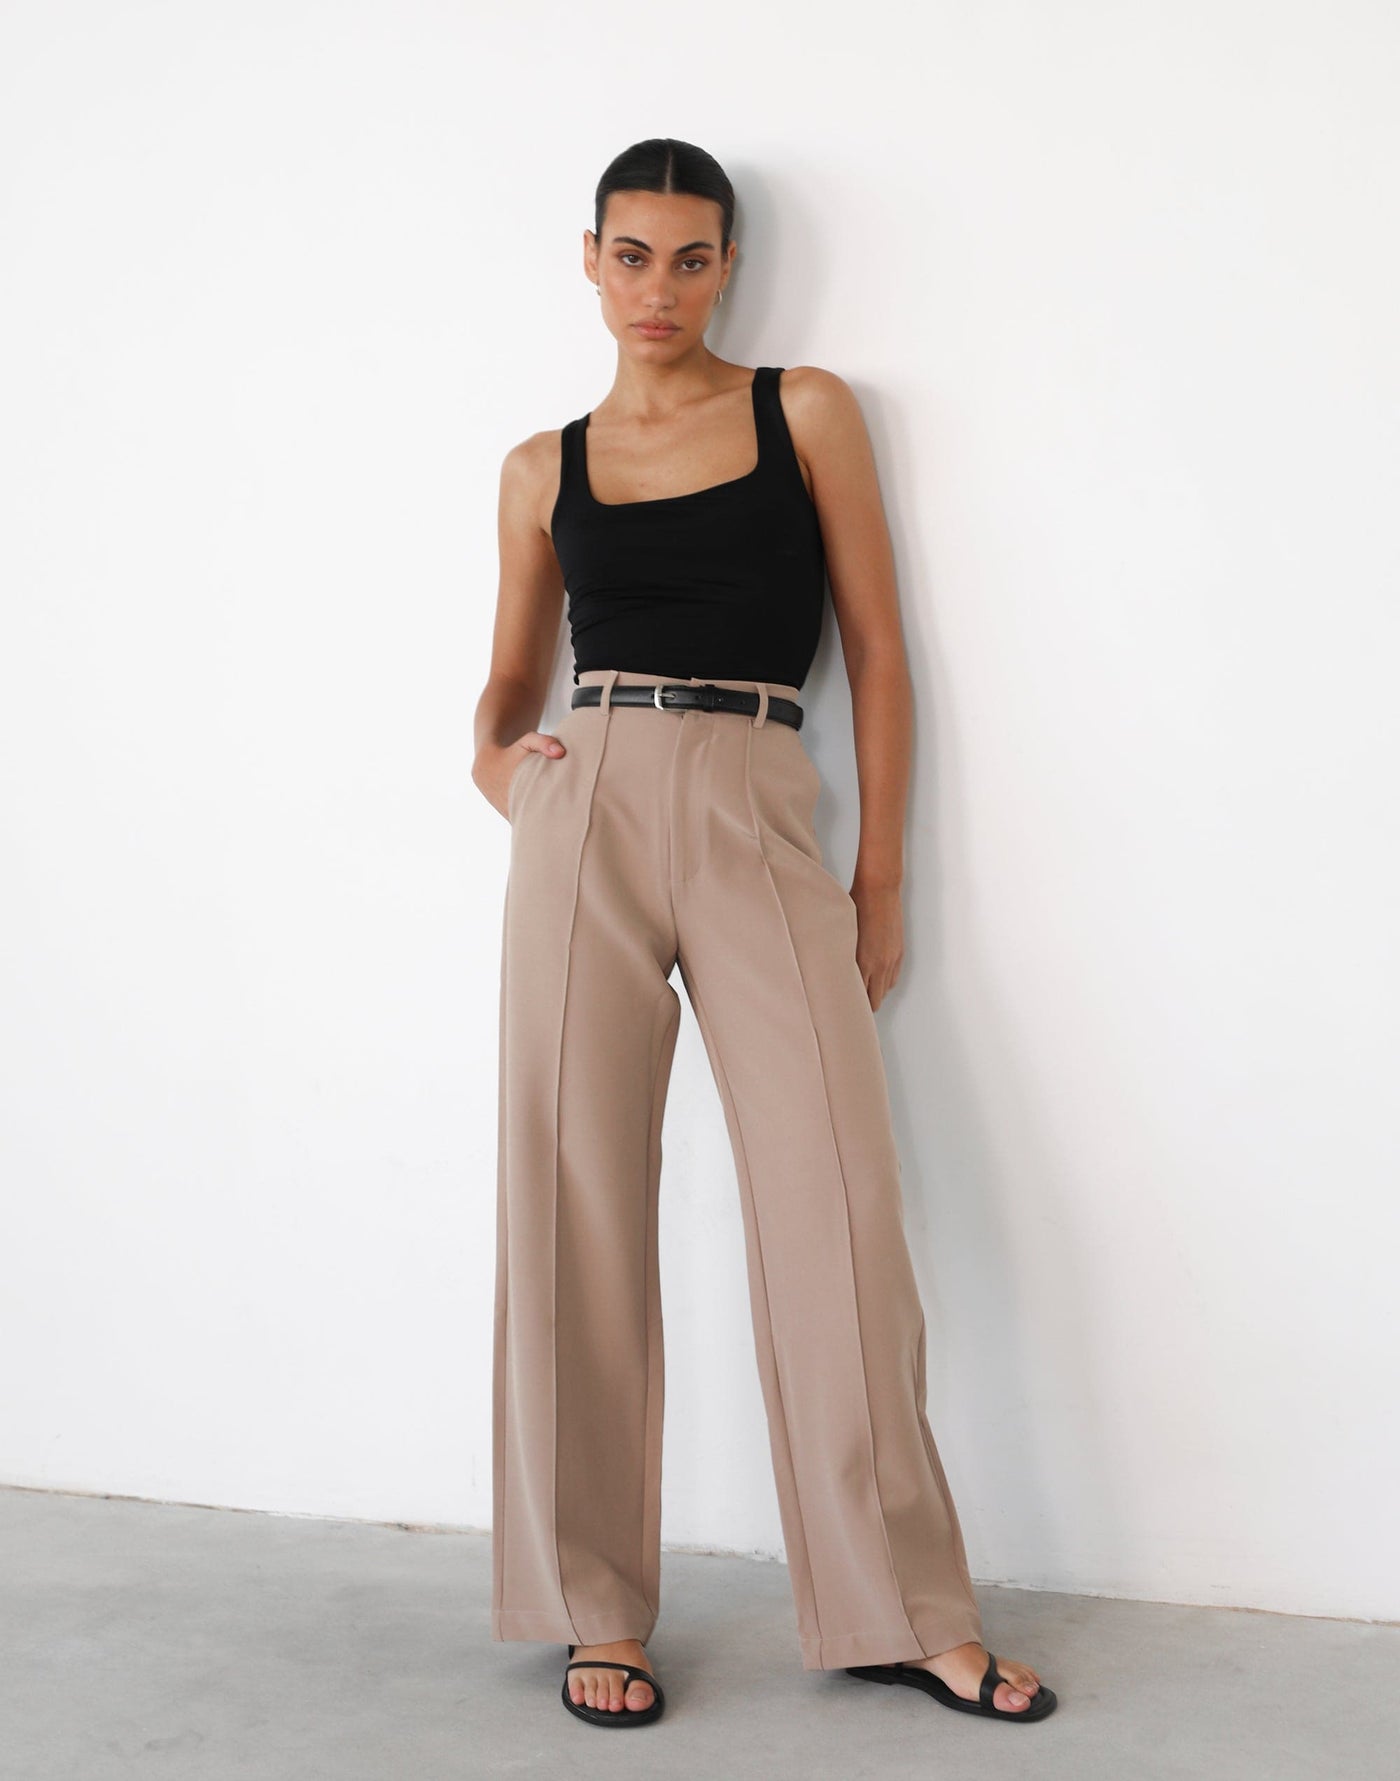 Colden Pants (Beige) - High Waisted Pleat Detail Pants - Women's Pants - Charcoal Clothing